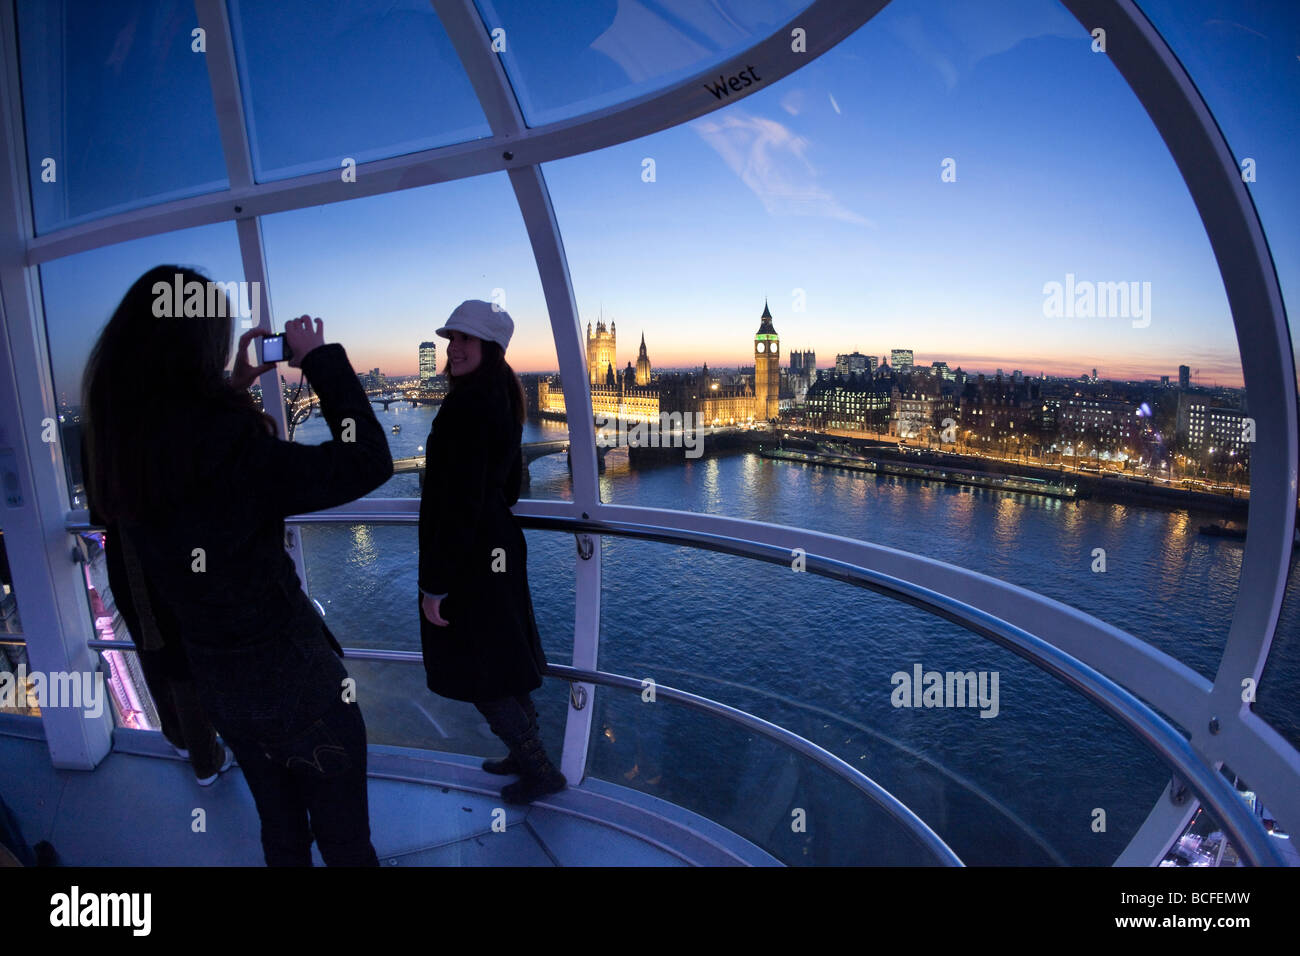 London Eye/Millennium Wheel, London, England Stock Photo